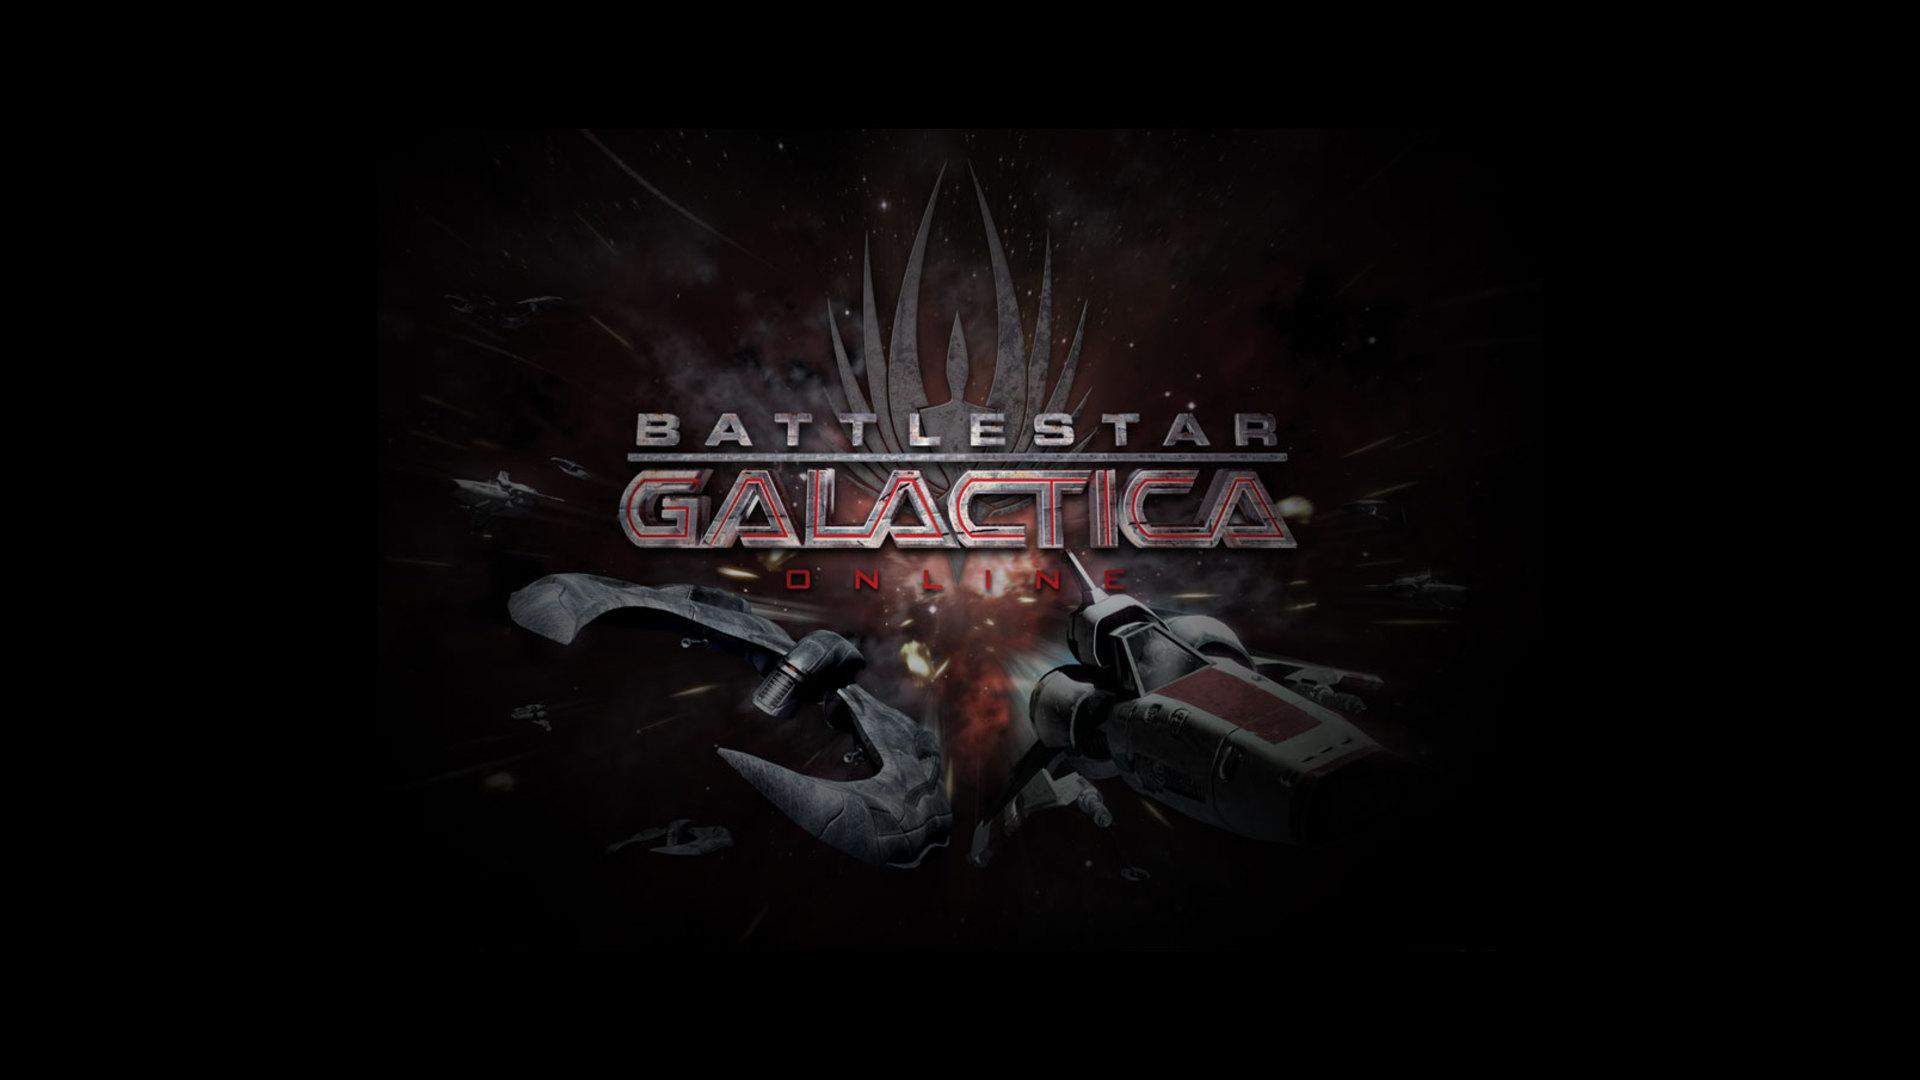 File Battlestar Galactica Wallpaper Qf2cj2s Jpg 4usky